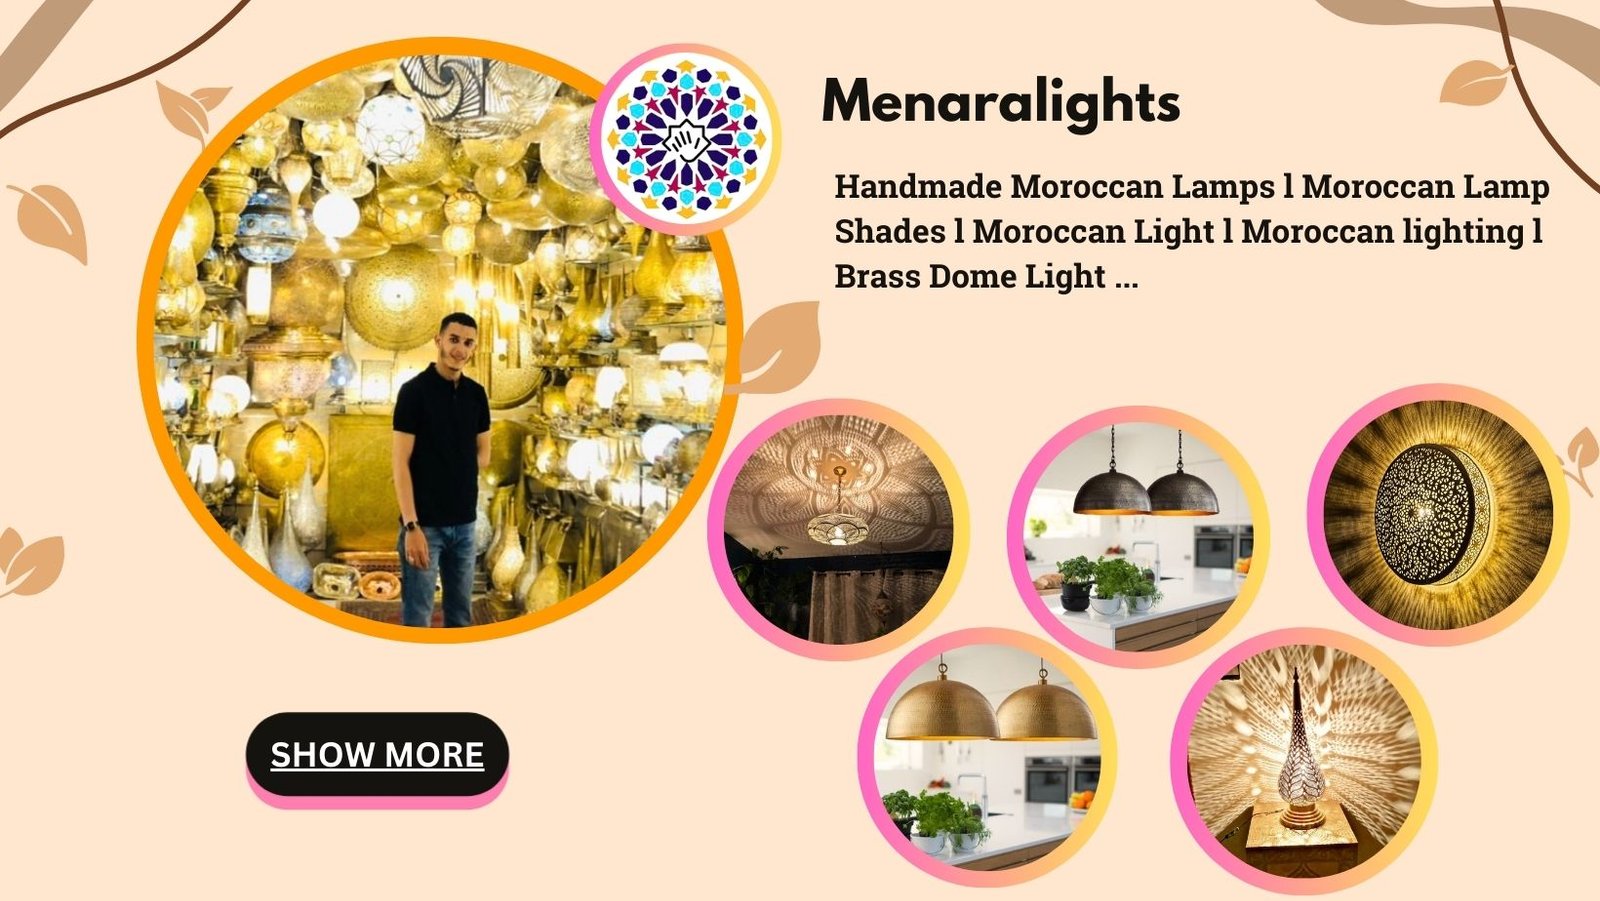 Handmade Moroccan Lamps l Moroccan Lamp Shades l Moroccan Light l Moroccan lighting l Brass Dome Light